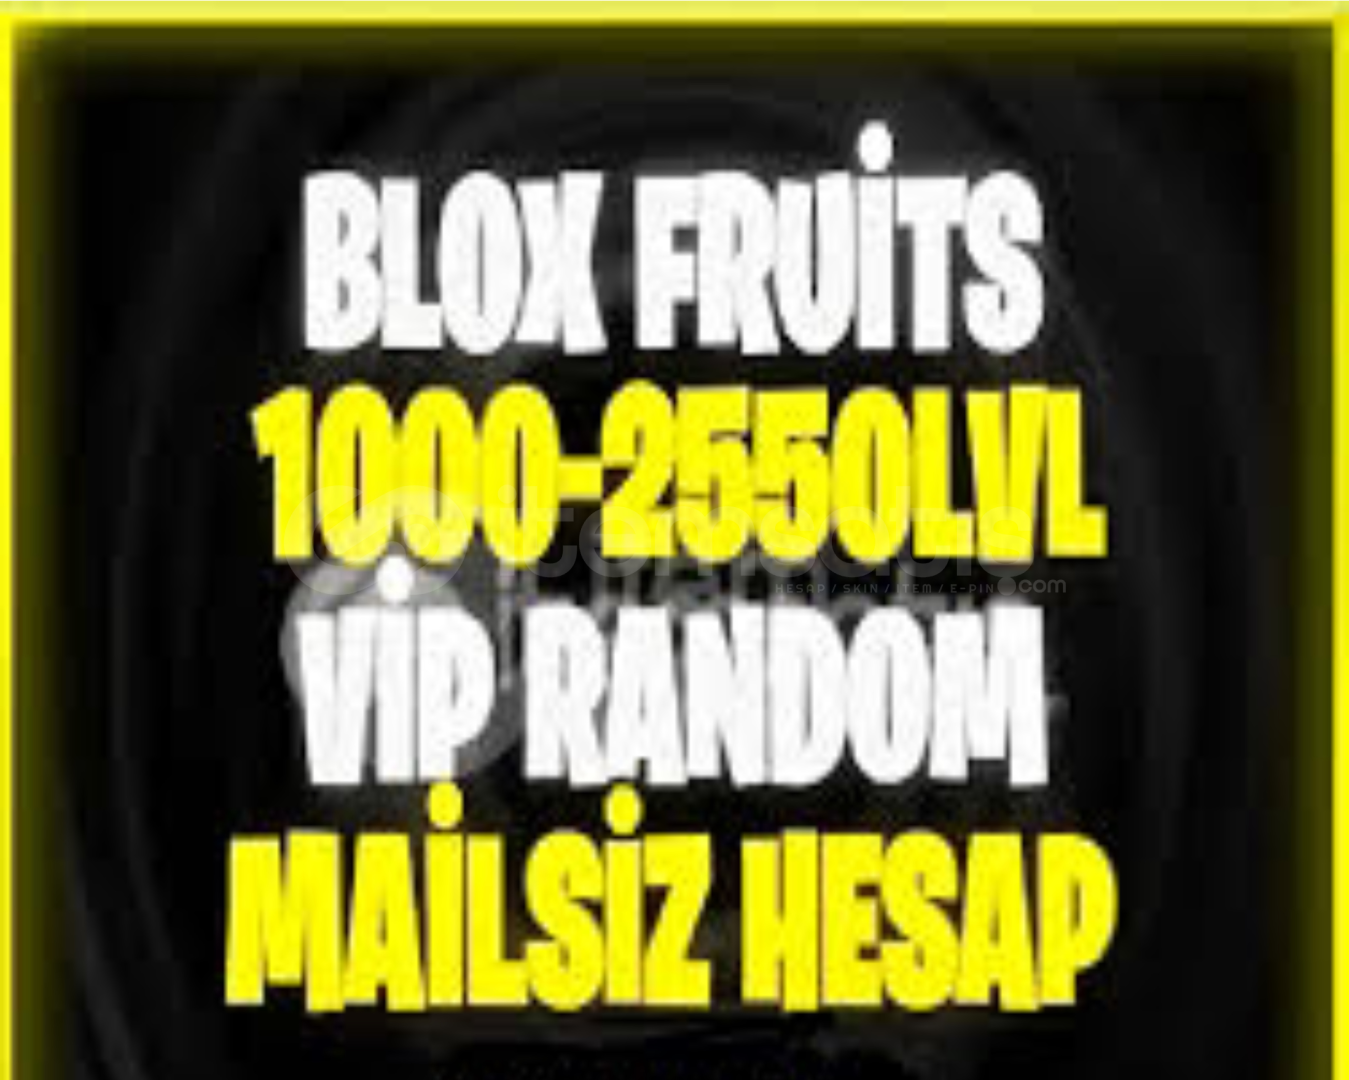 VIP] BLOX FRUIT RANDOM MAILSIZ HESAP 